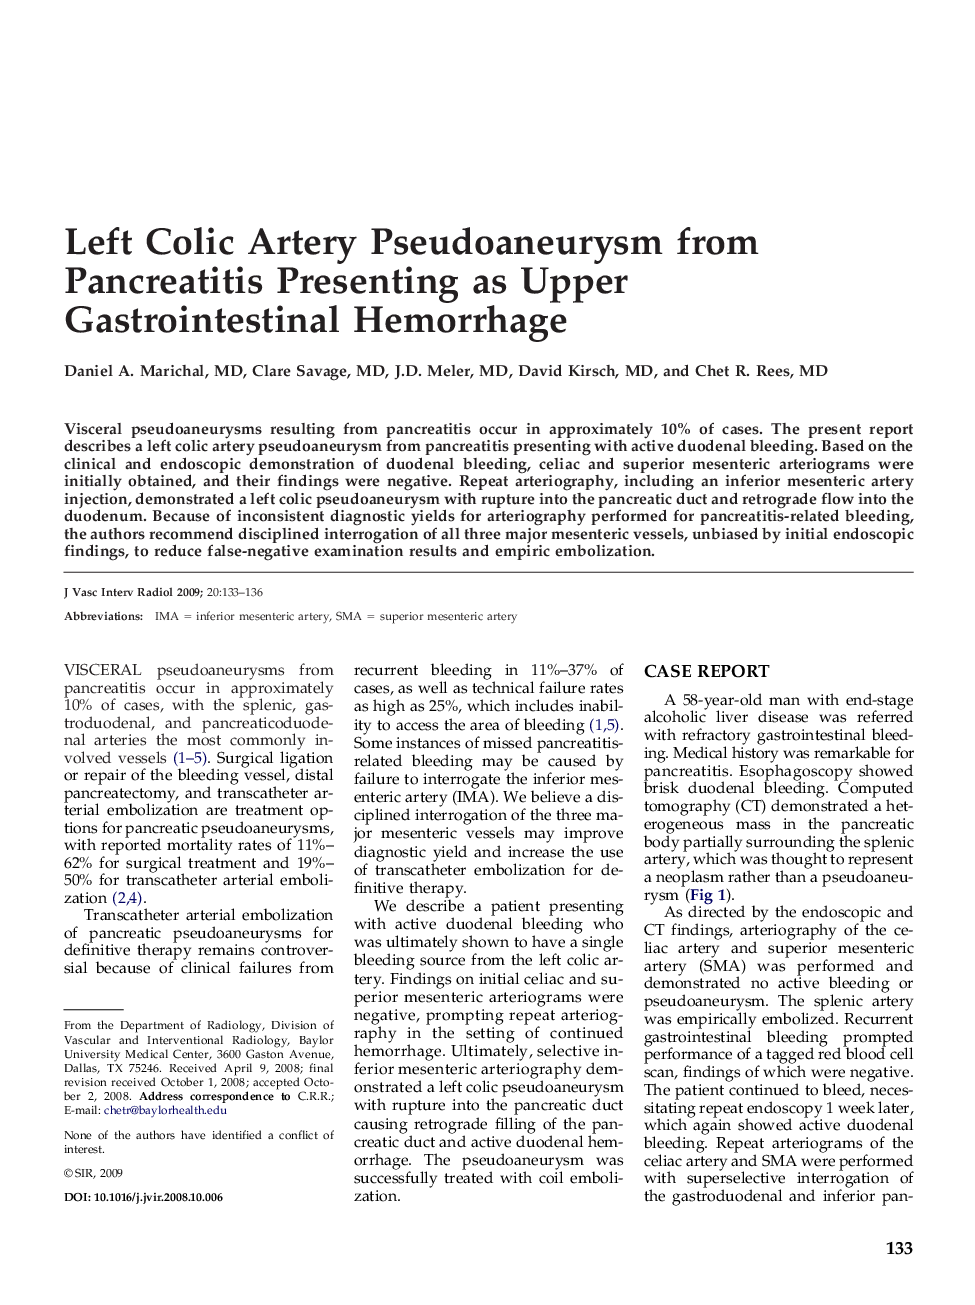 Left Colic Artery Pseudoaneurysm from Pancreatitis Presenting as Upper Gastrointestinal Hemorrhage